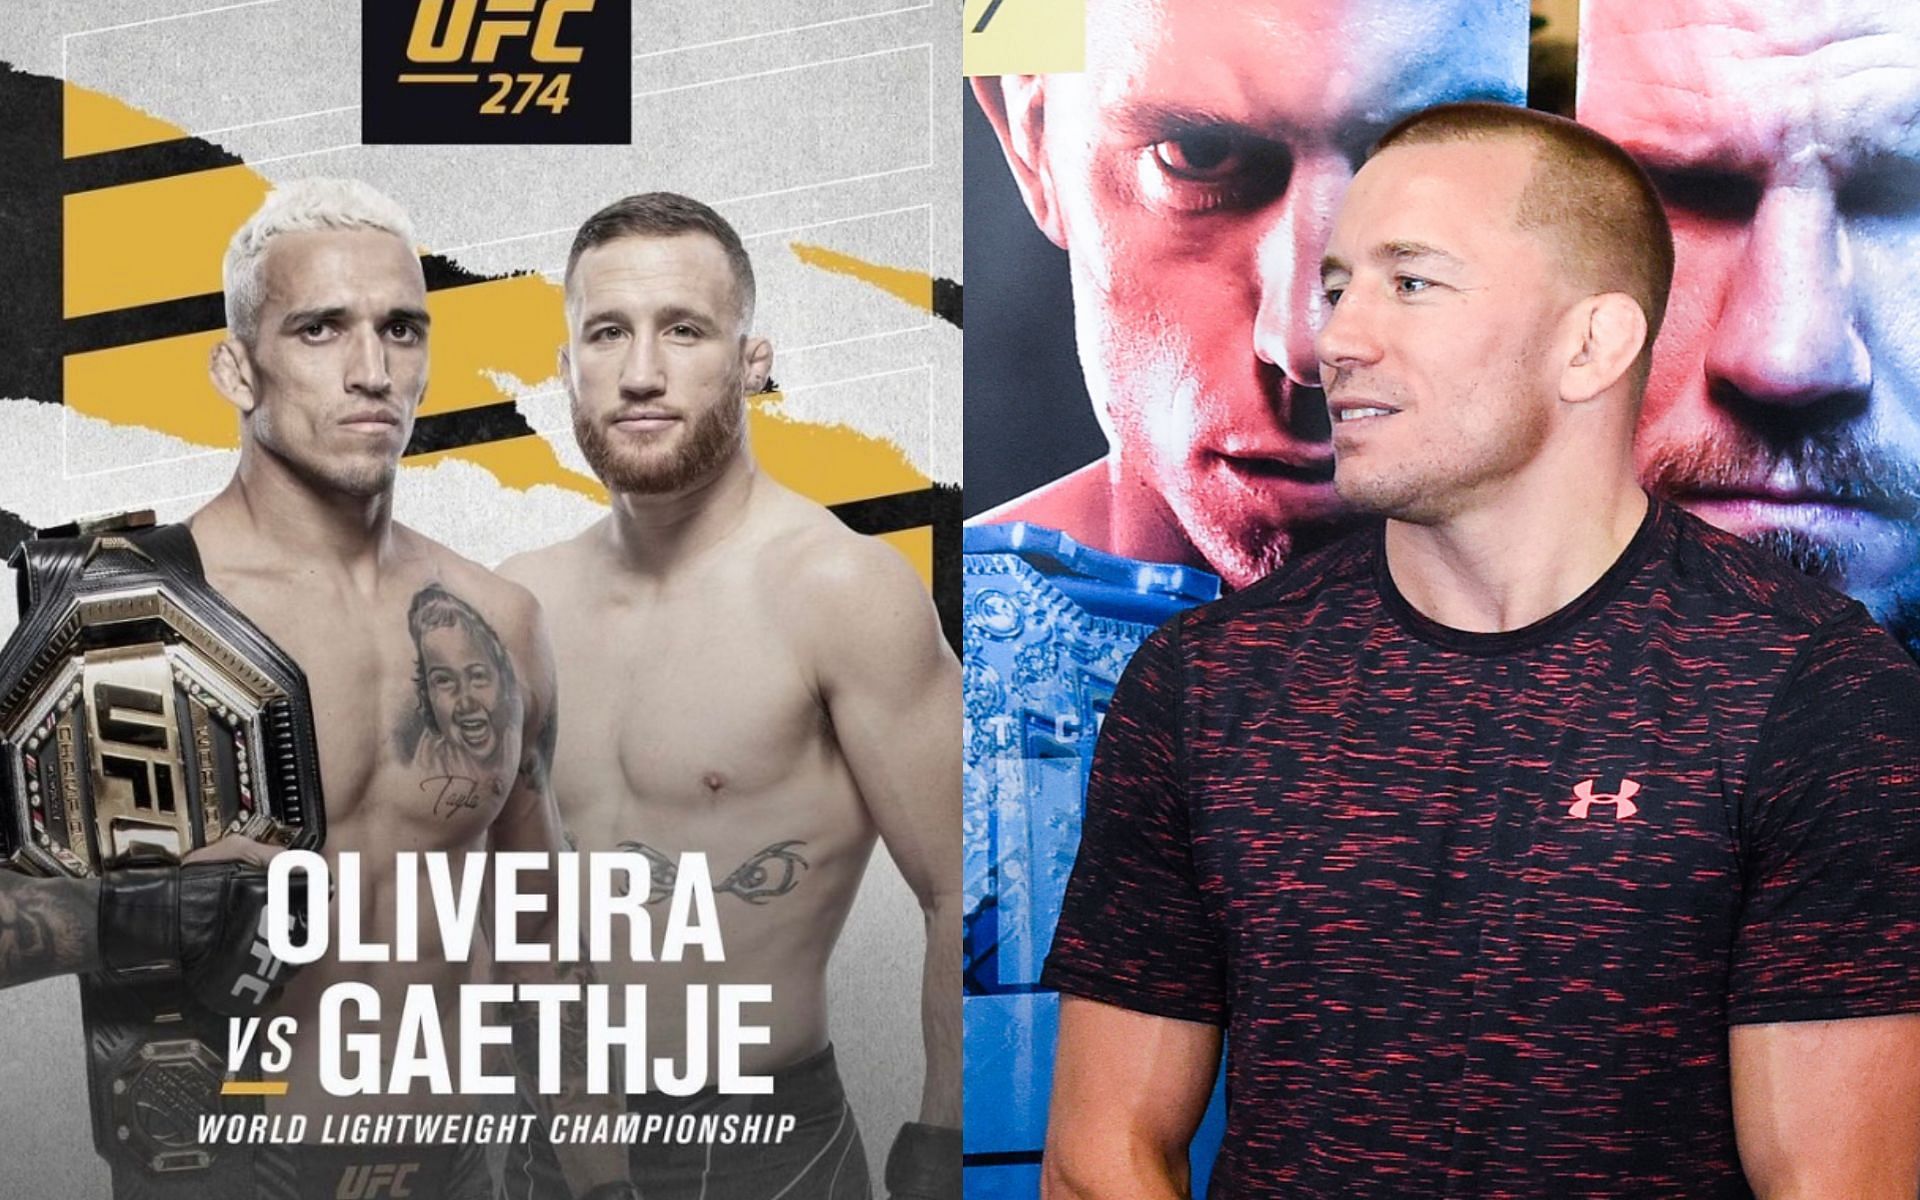 UFC 274: Oliveira vs. Gaethje &amp; Georges St-Pierre (Image Credit: @Justin_gaethje on Instagram &amp; Getty)